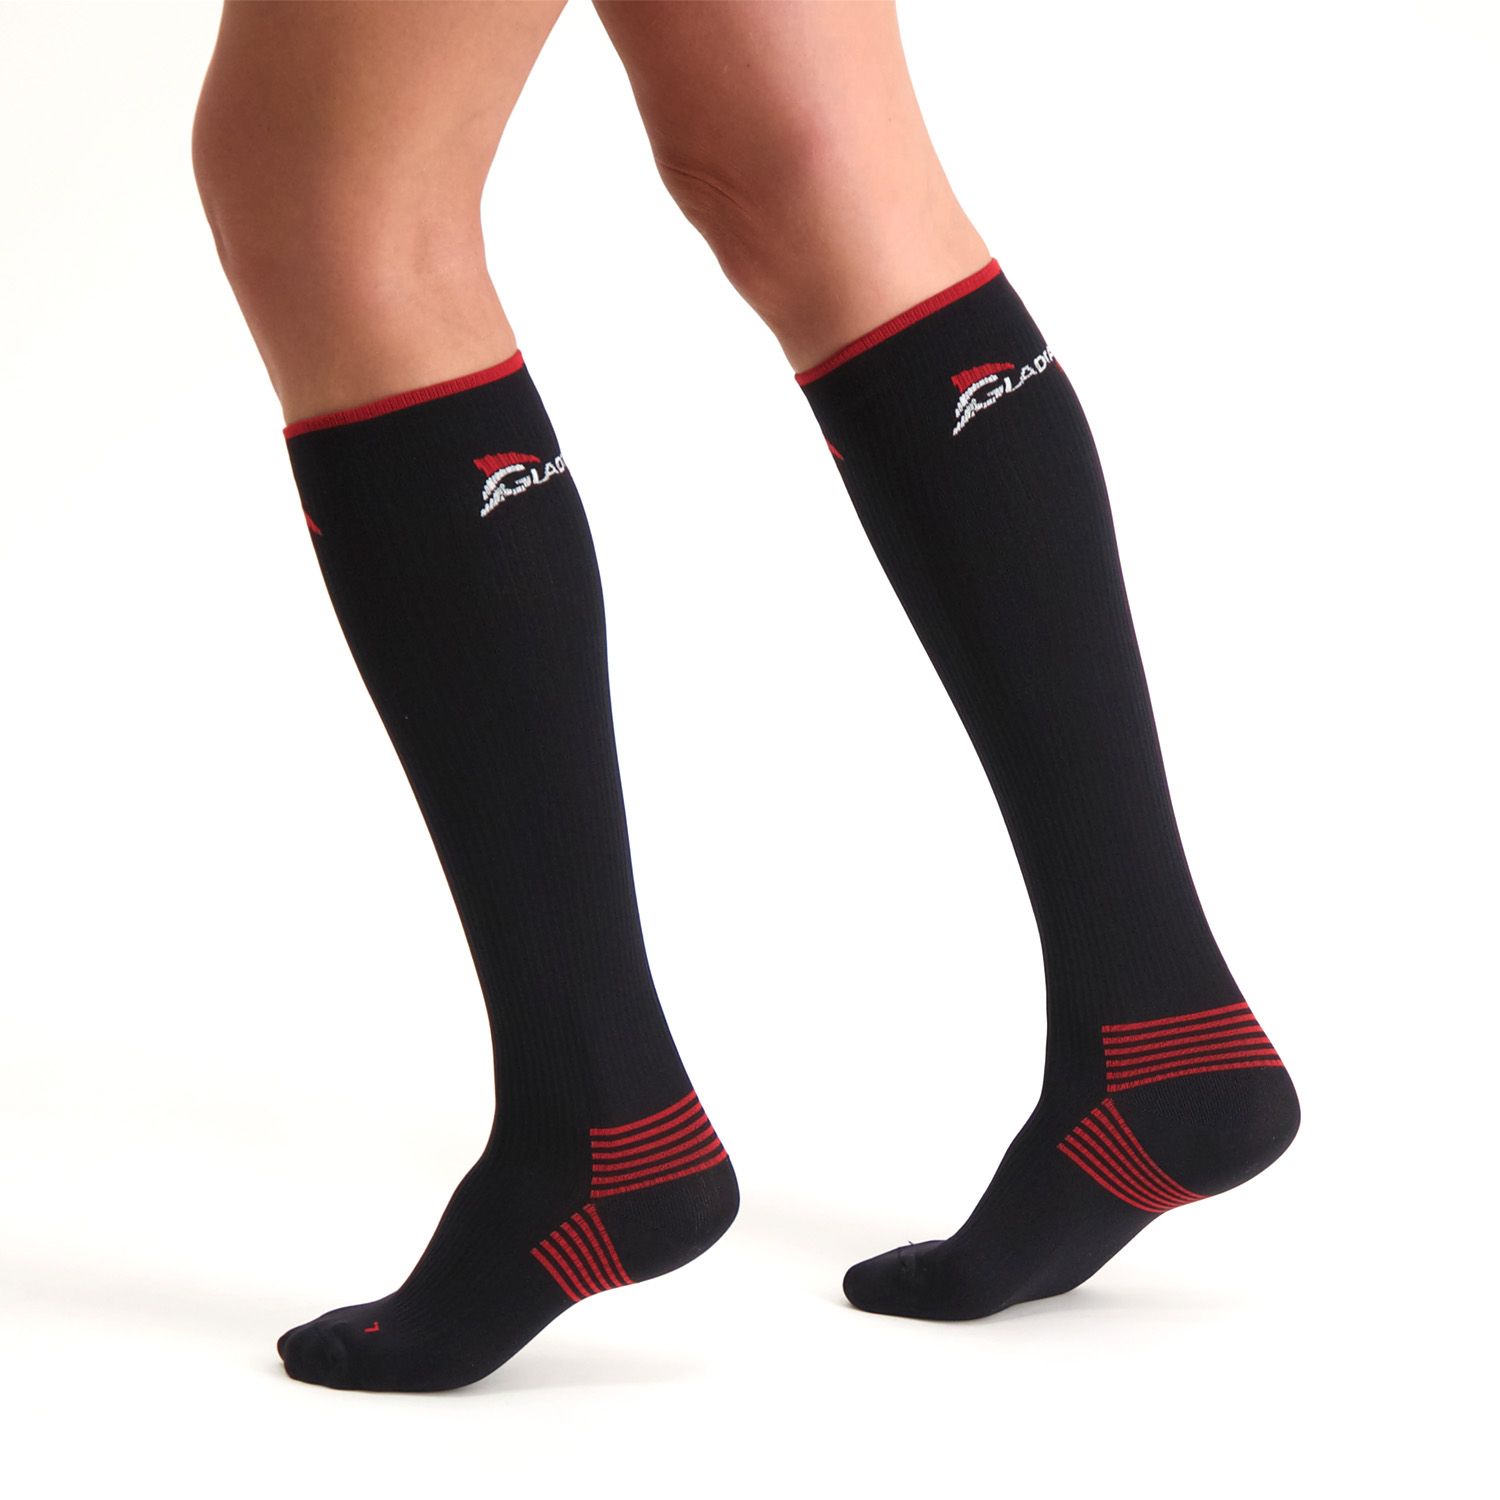 gladiator sports premium compression stockings worn side view